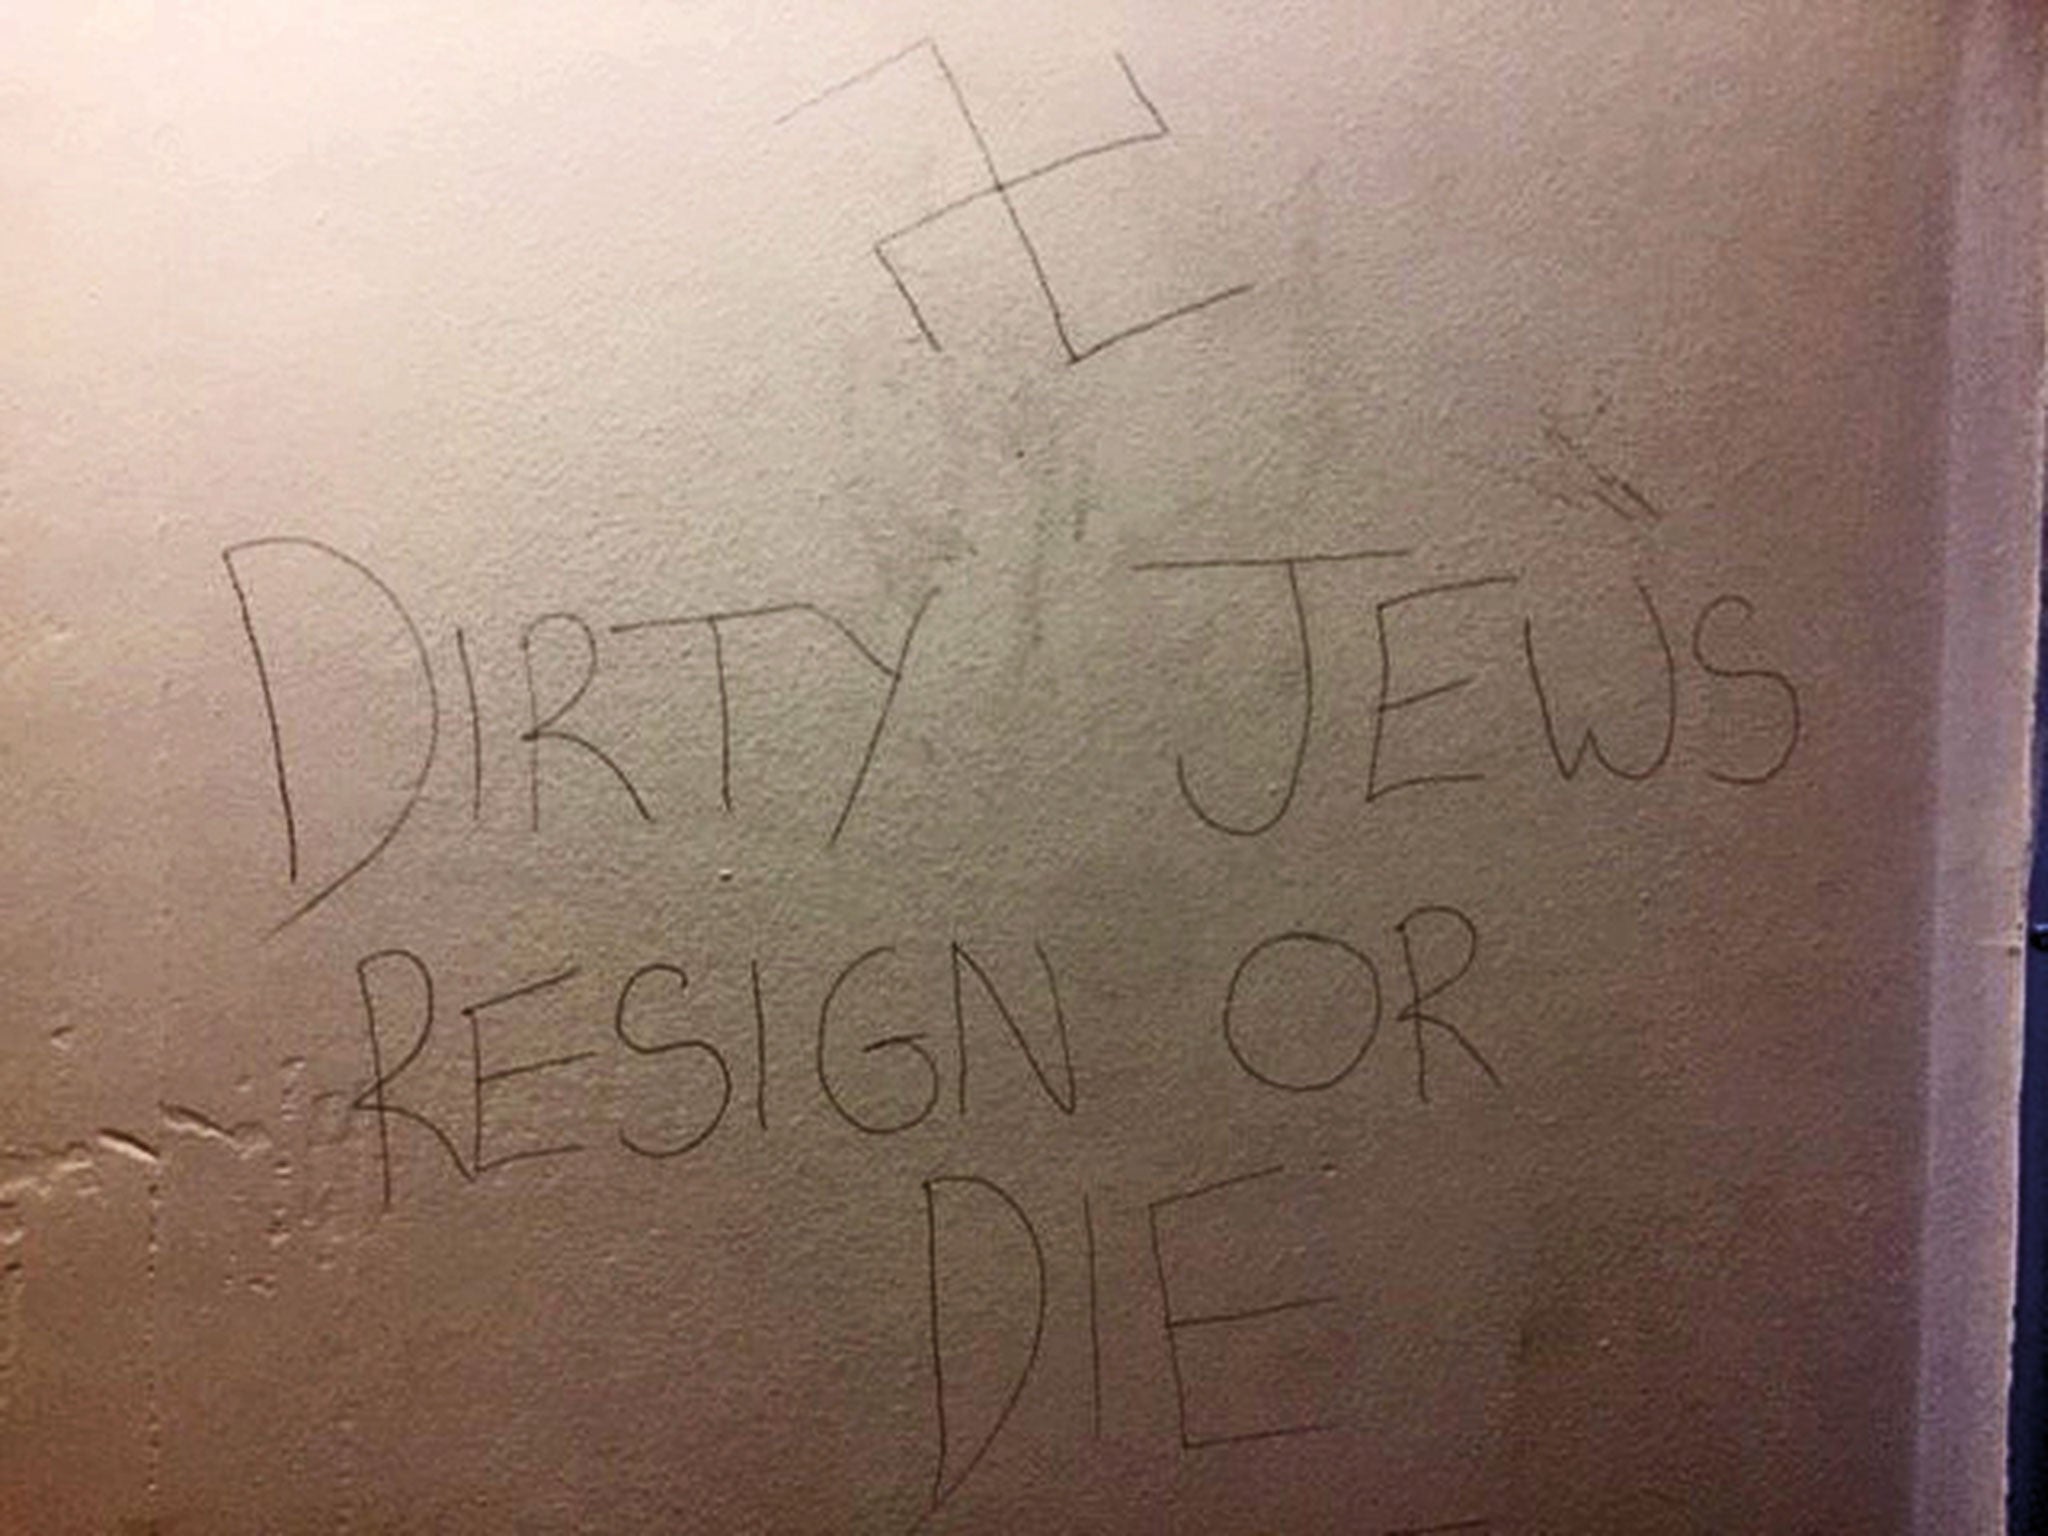 Anti-Semitic graffiti at the University of Birmingham in March